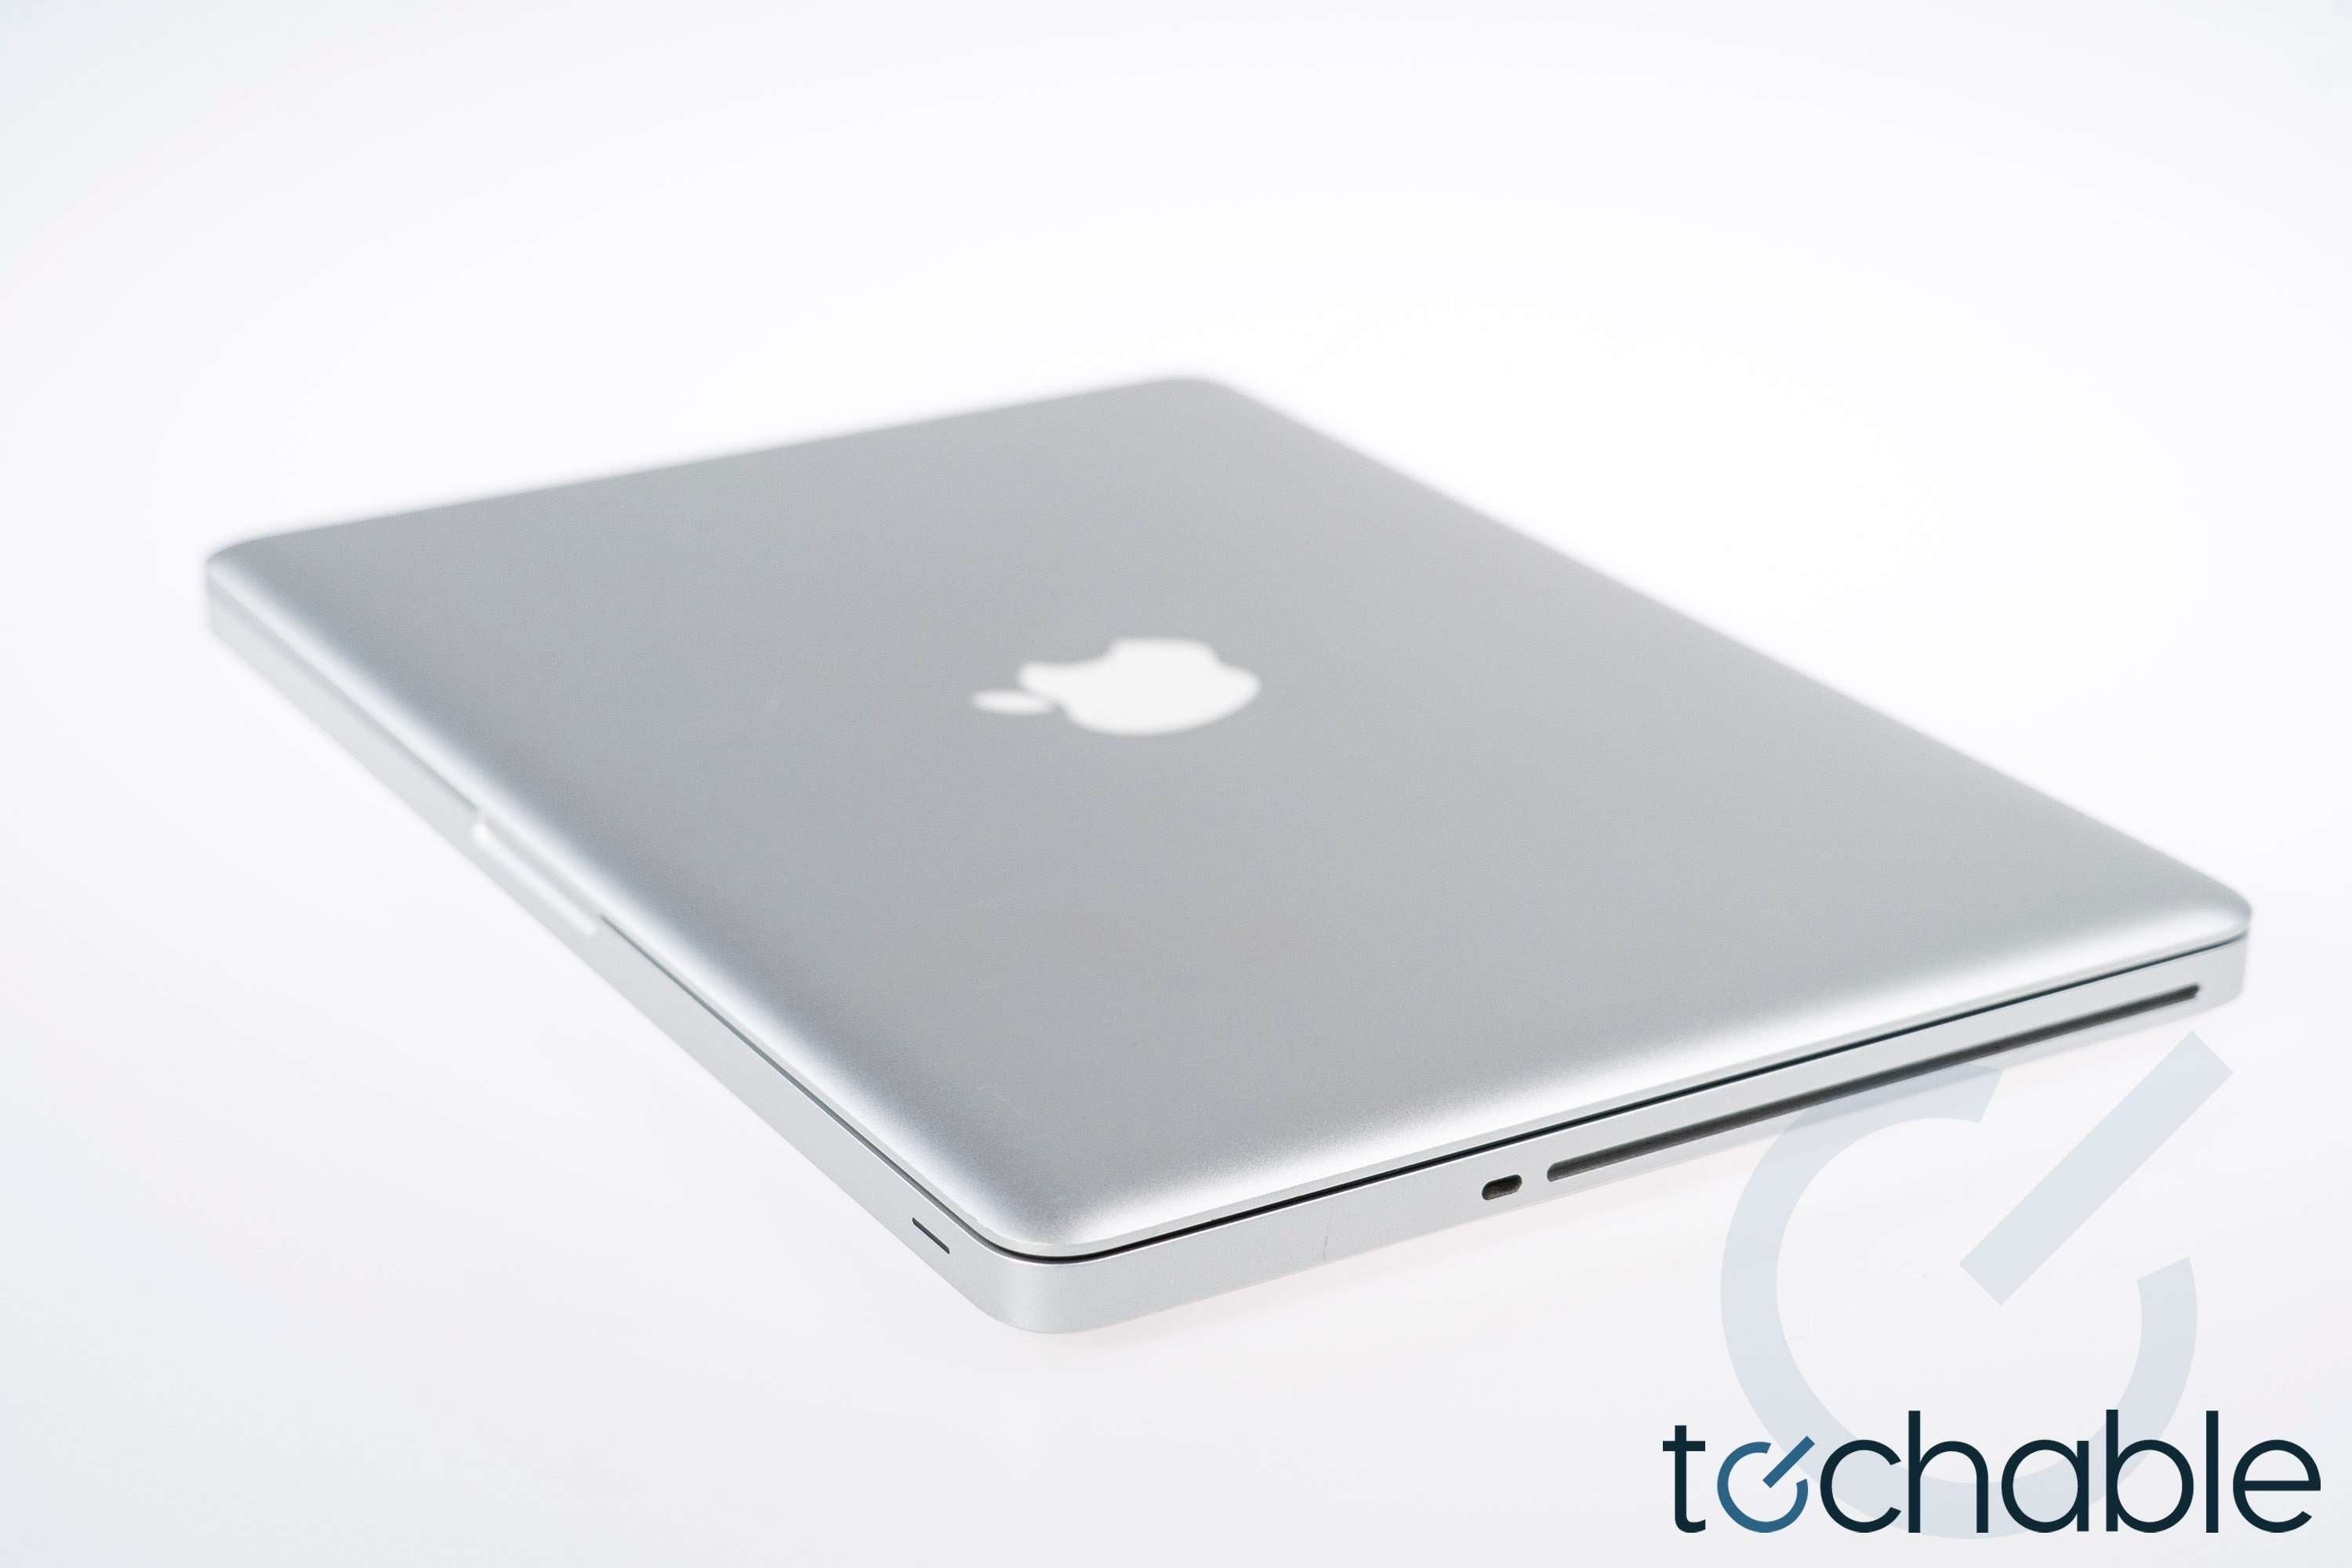 2012 Apple MacBook Pro Core i7 2.5GHz i5 MD101LL/A